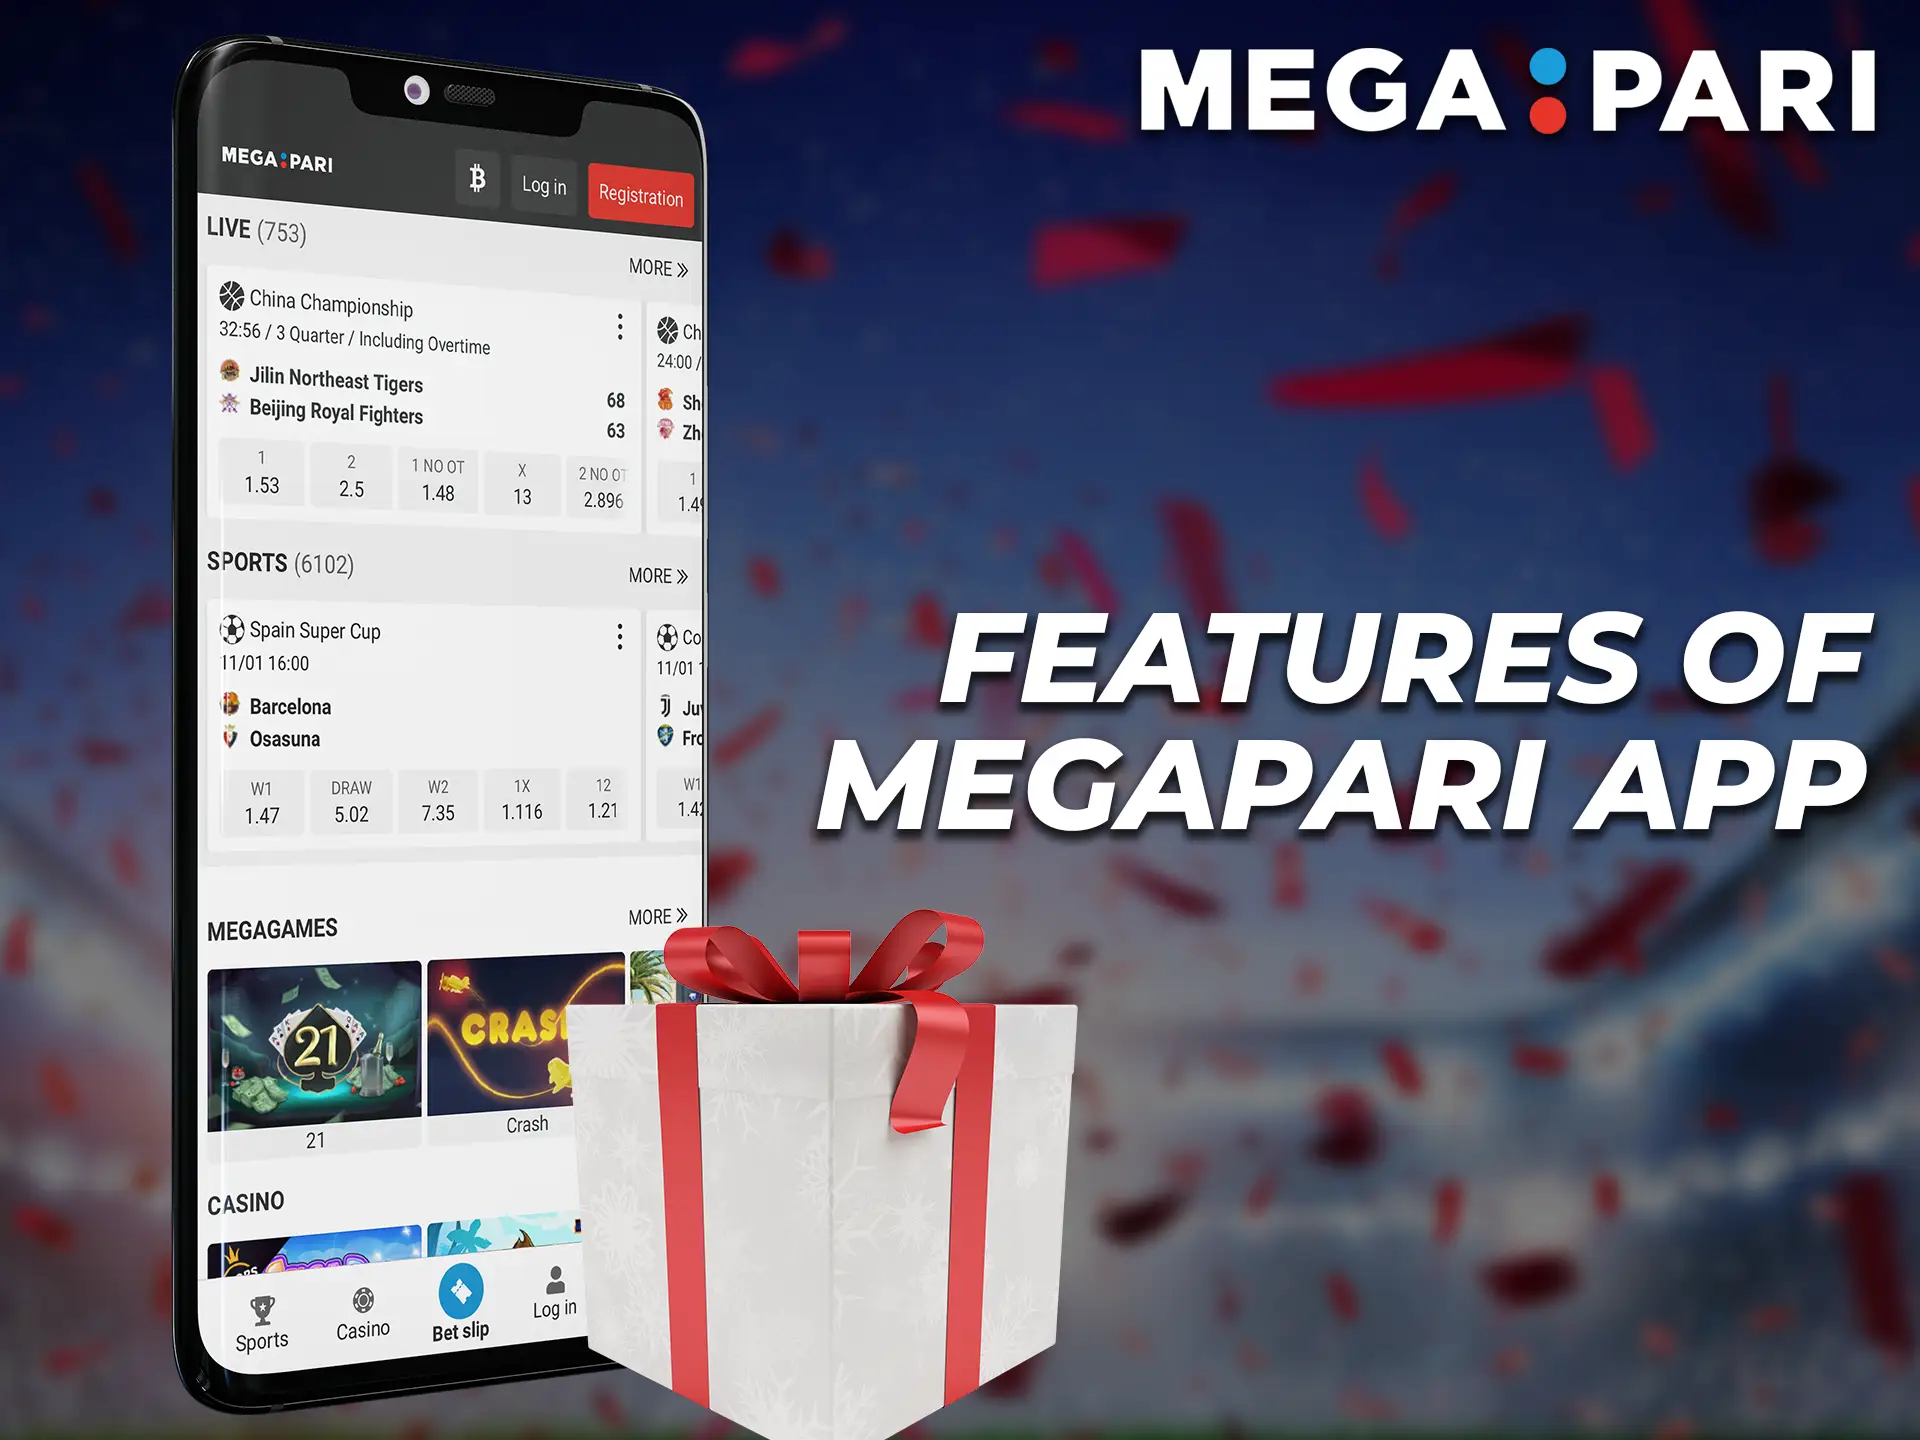 Megapari app has some special advantages.